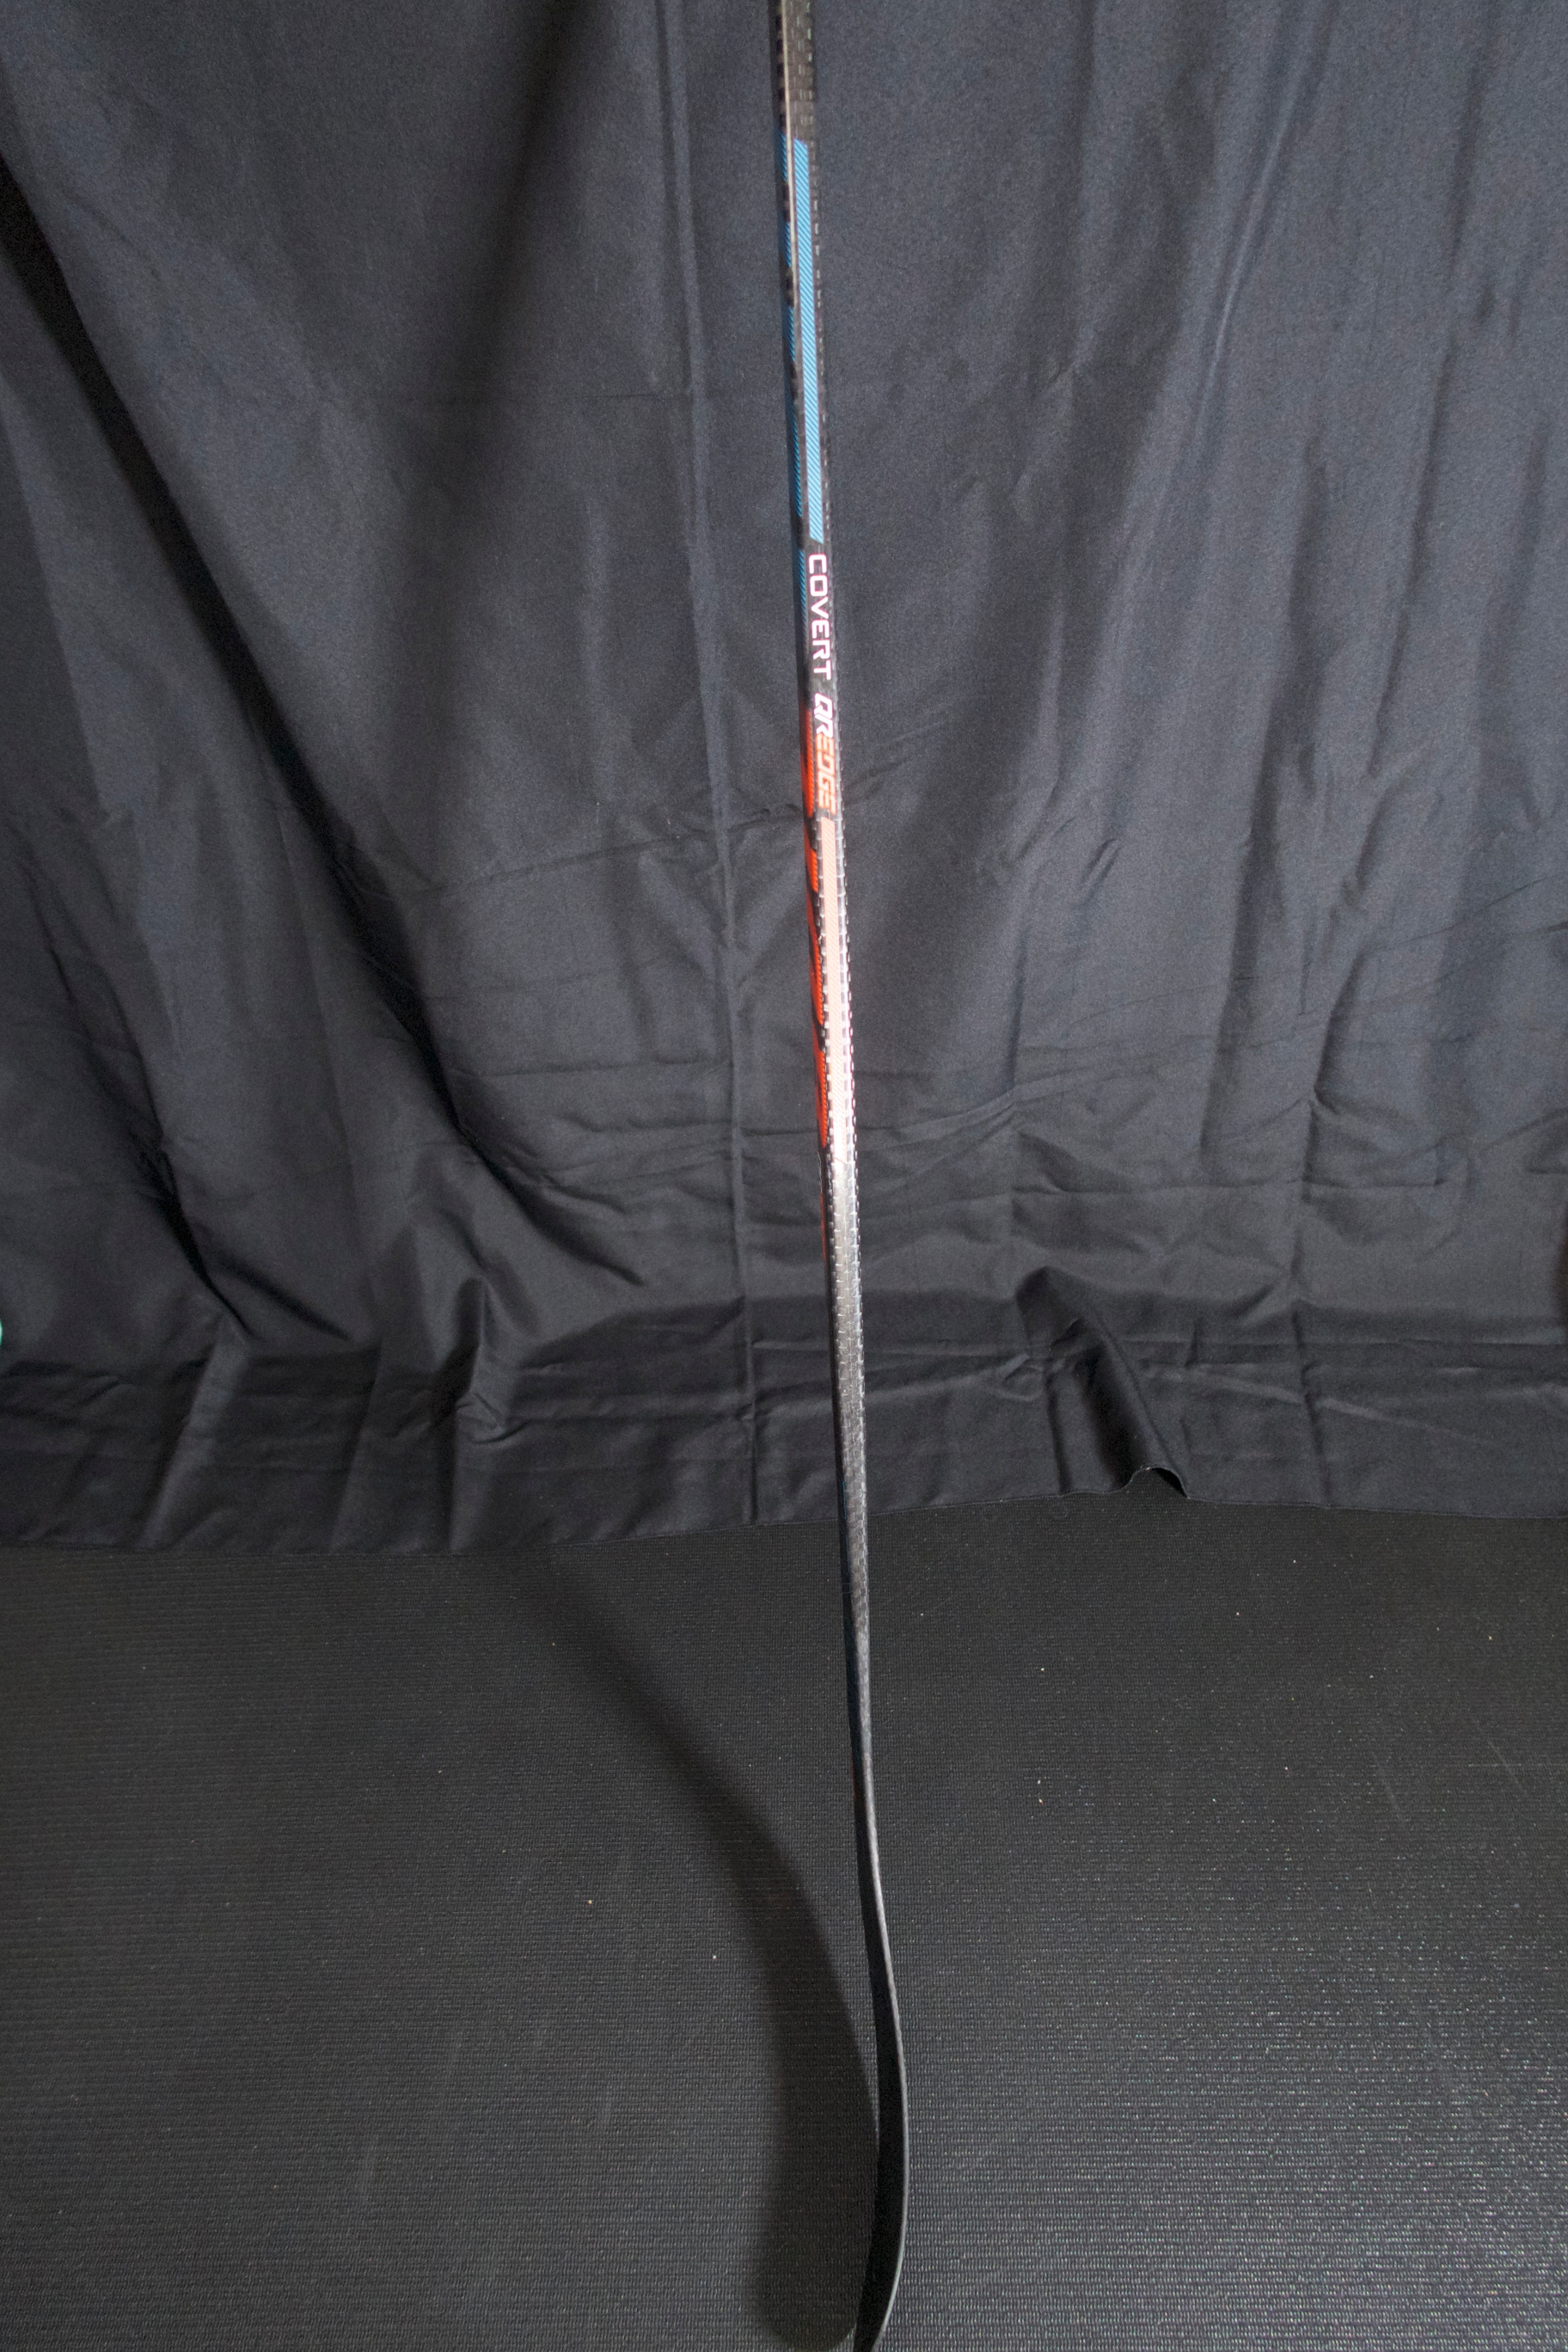 Warrior Covert QR Edge Hockey Stick Pro Stock Used Left Handed